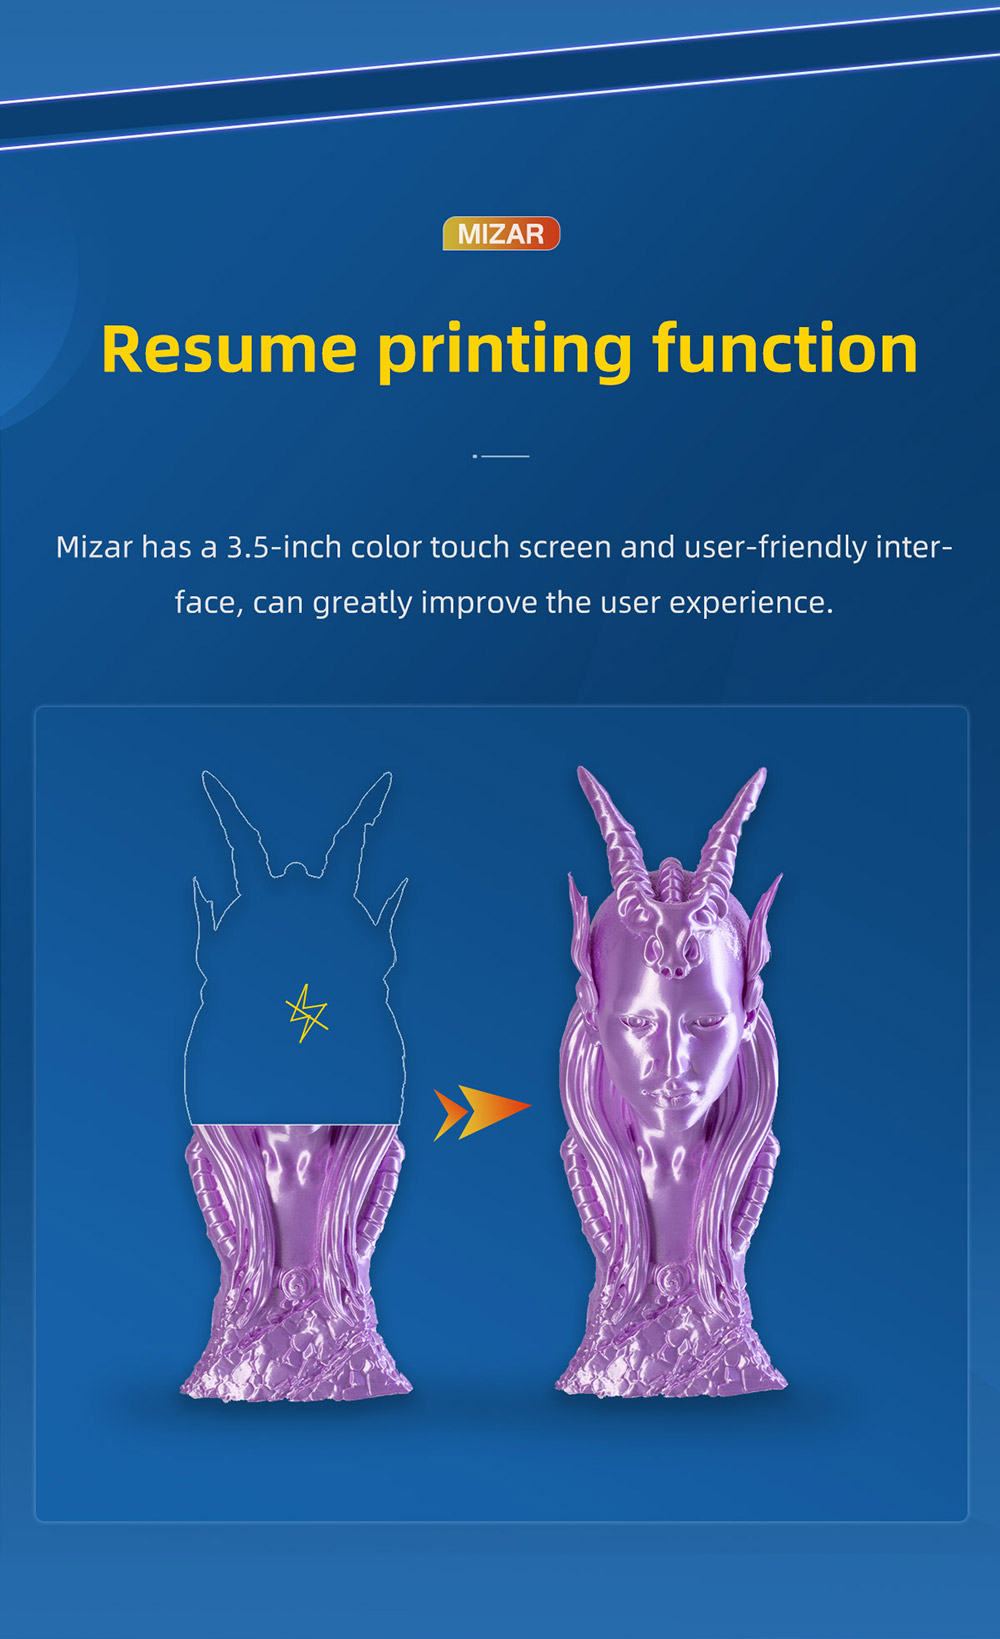 Mizar resume printing function